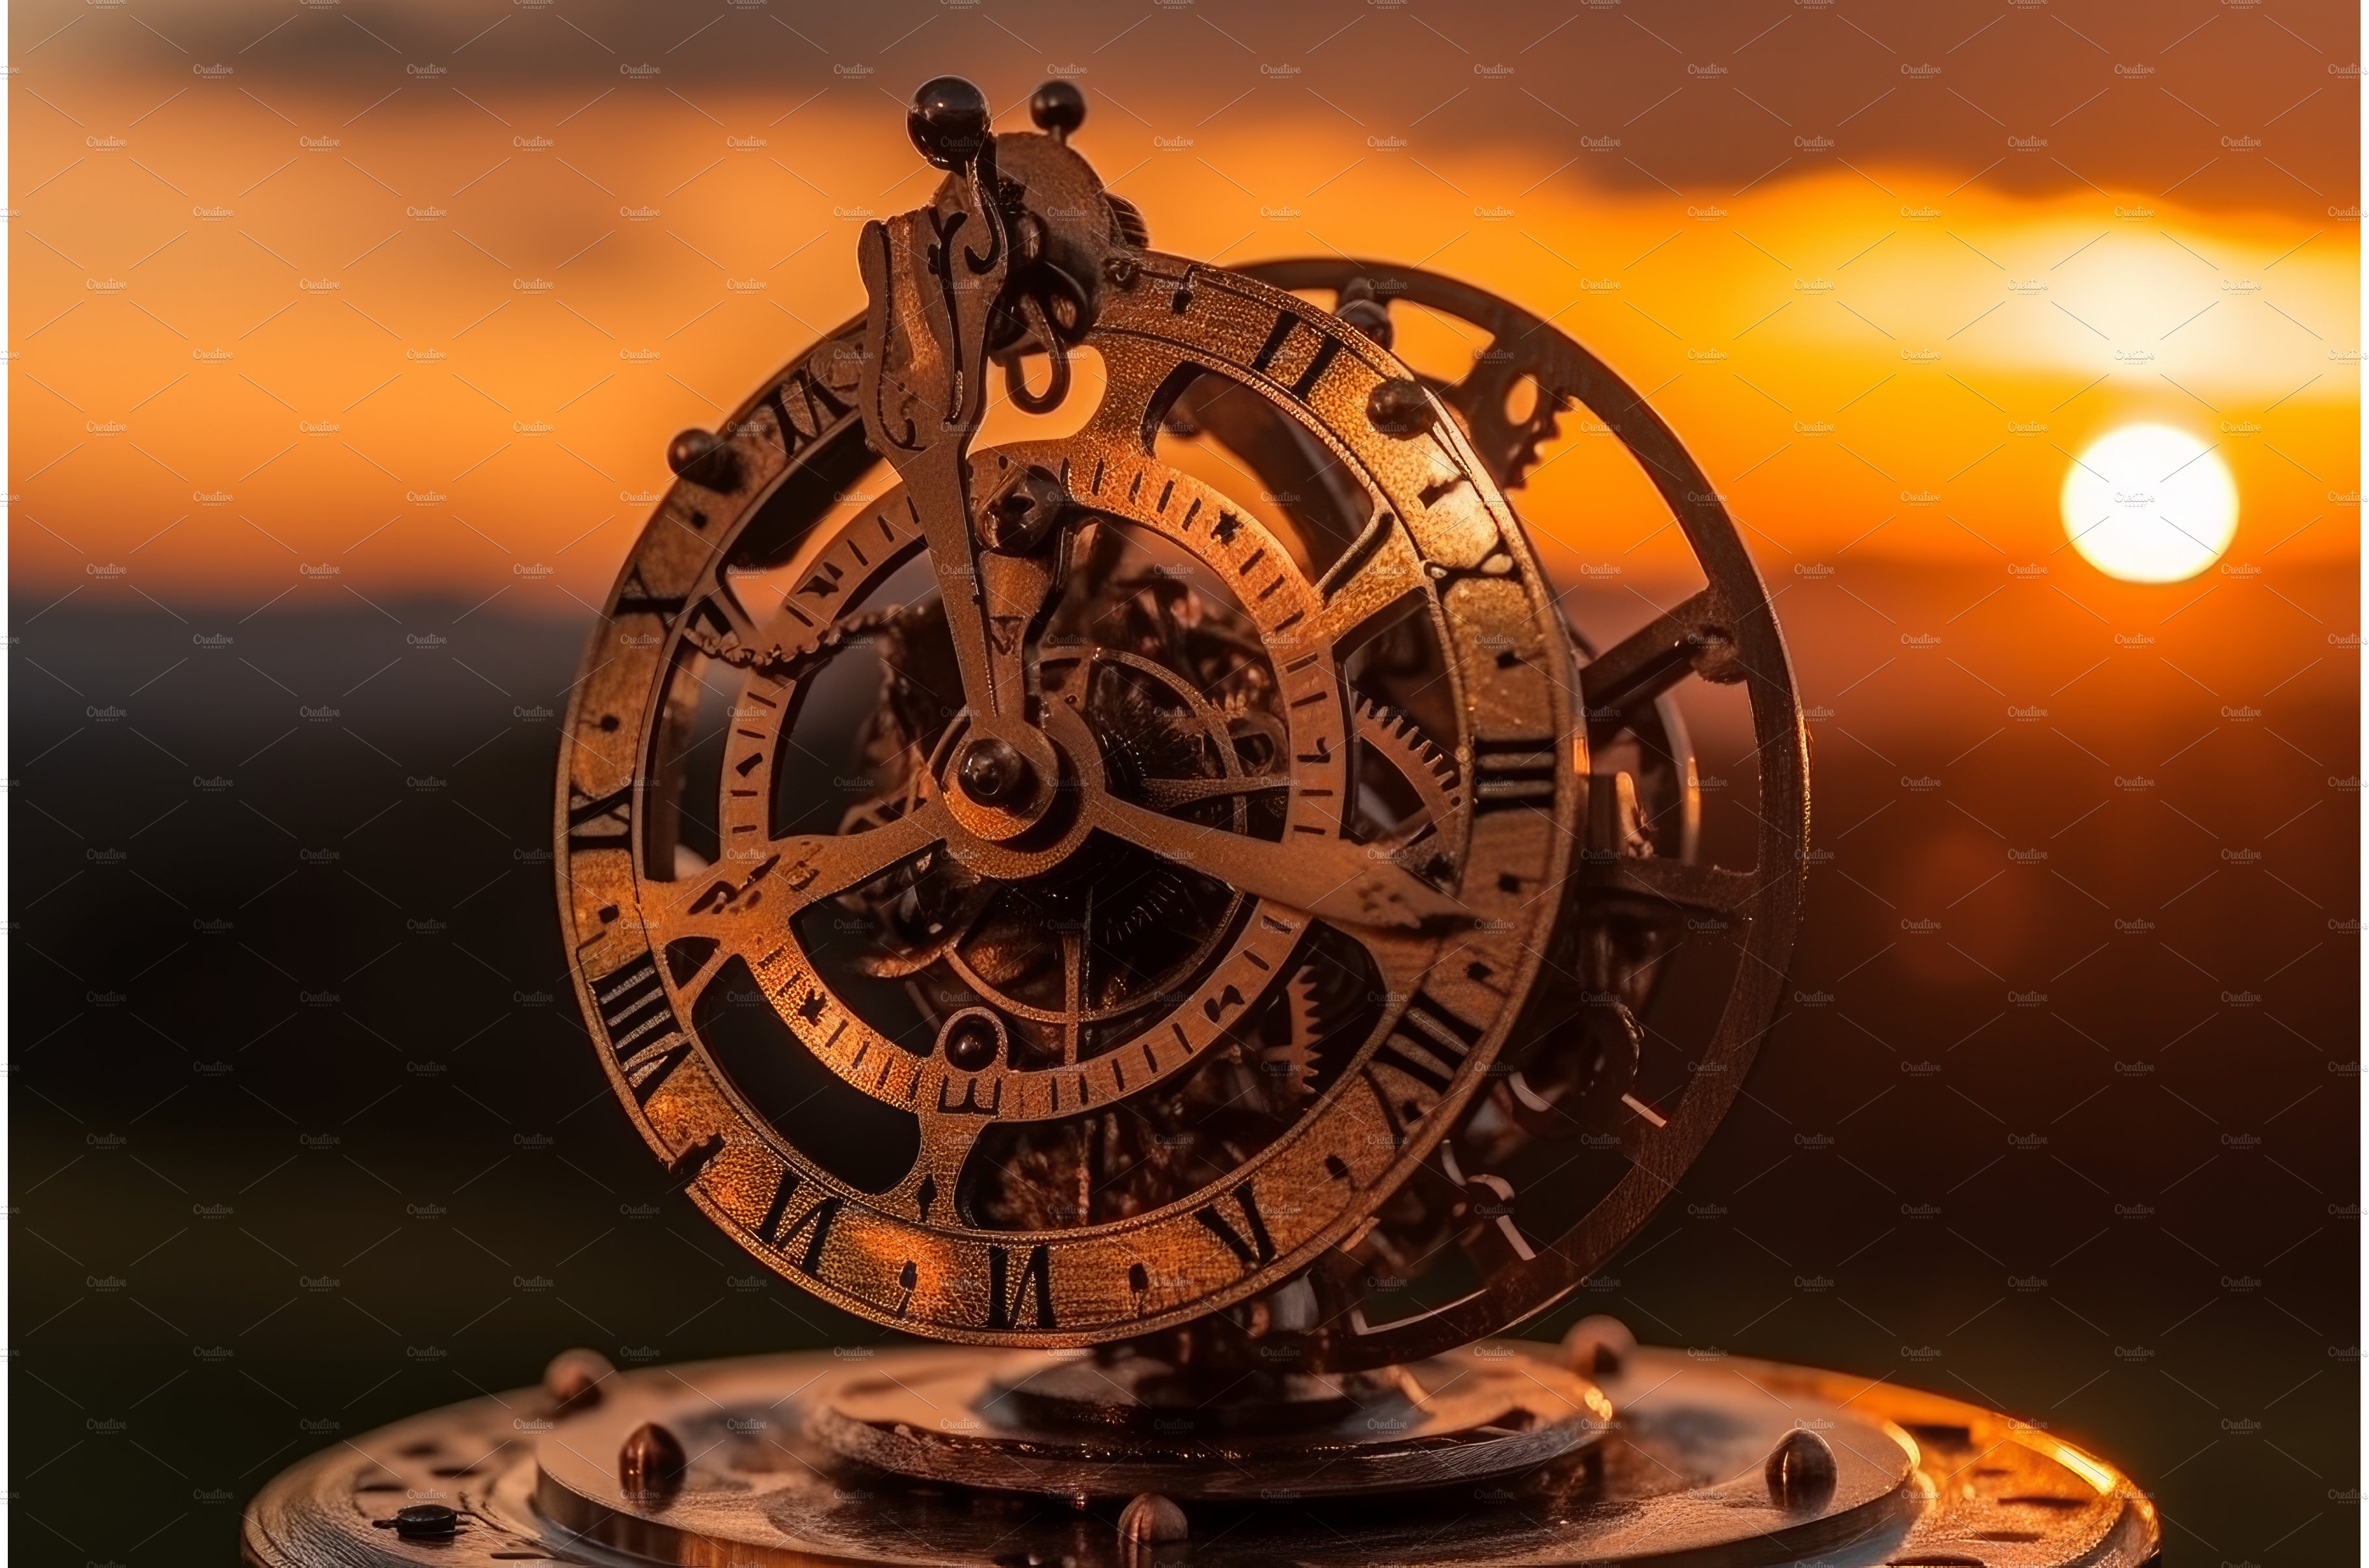 Zodiac clock at sunset. Generate Ai cover image.